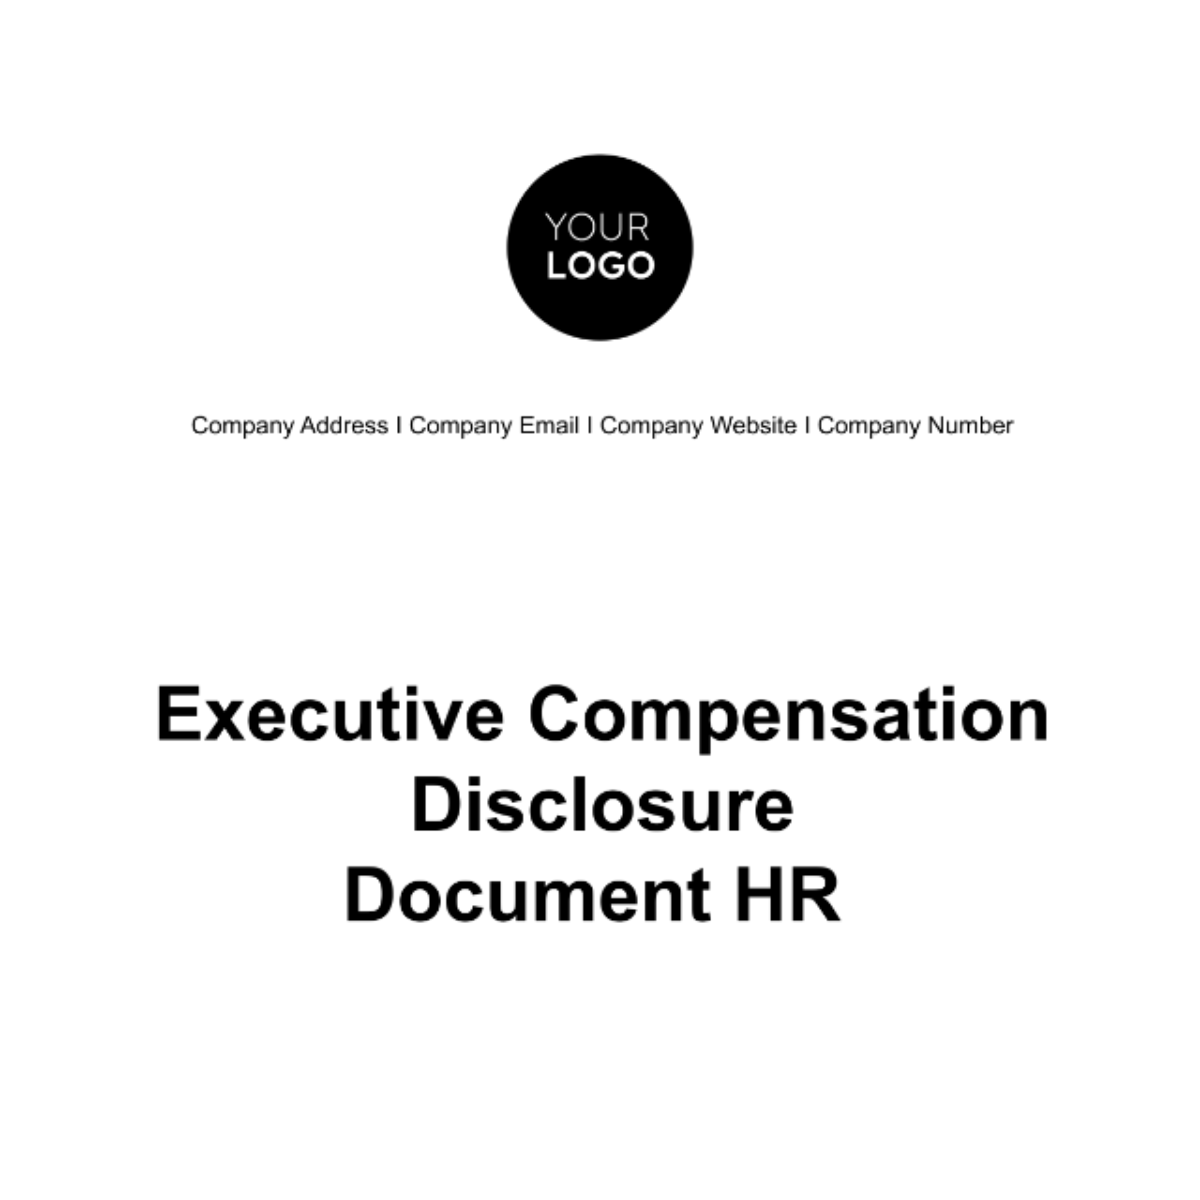 Executive Compensation Disclosure Document HR Template